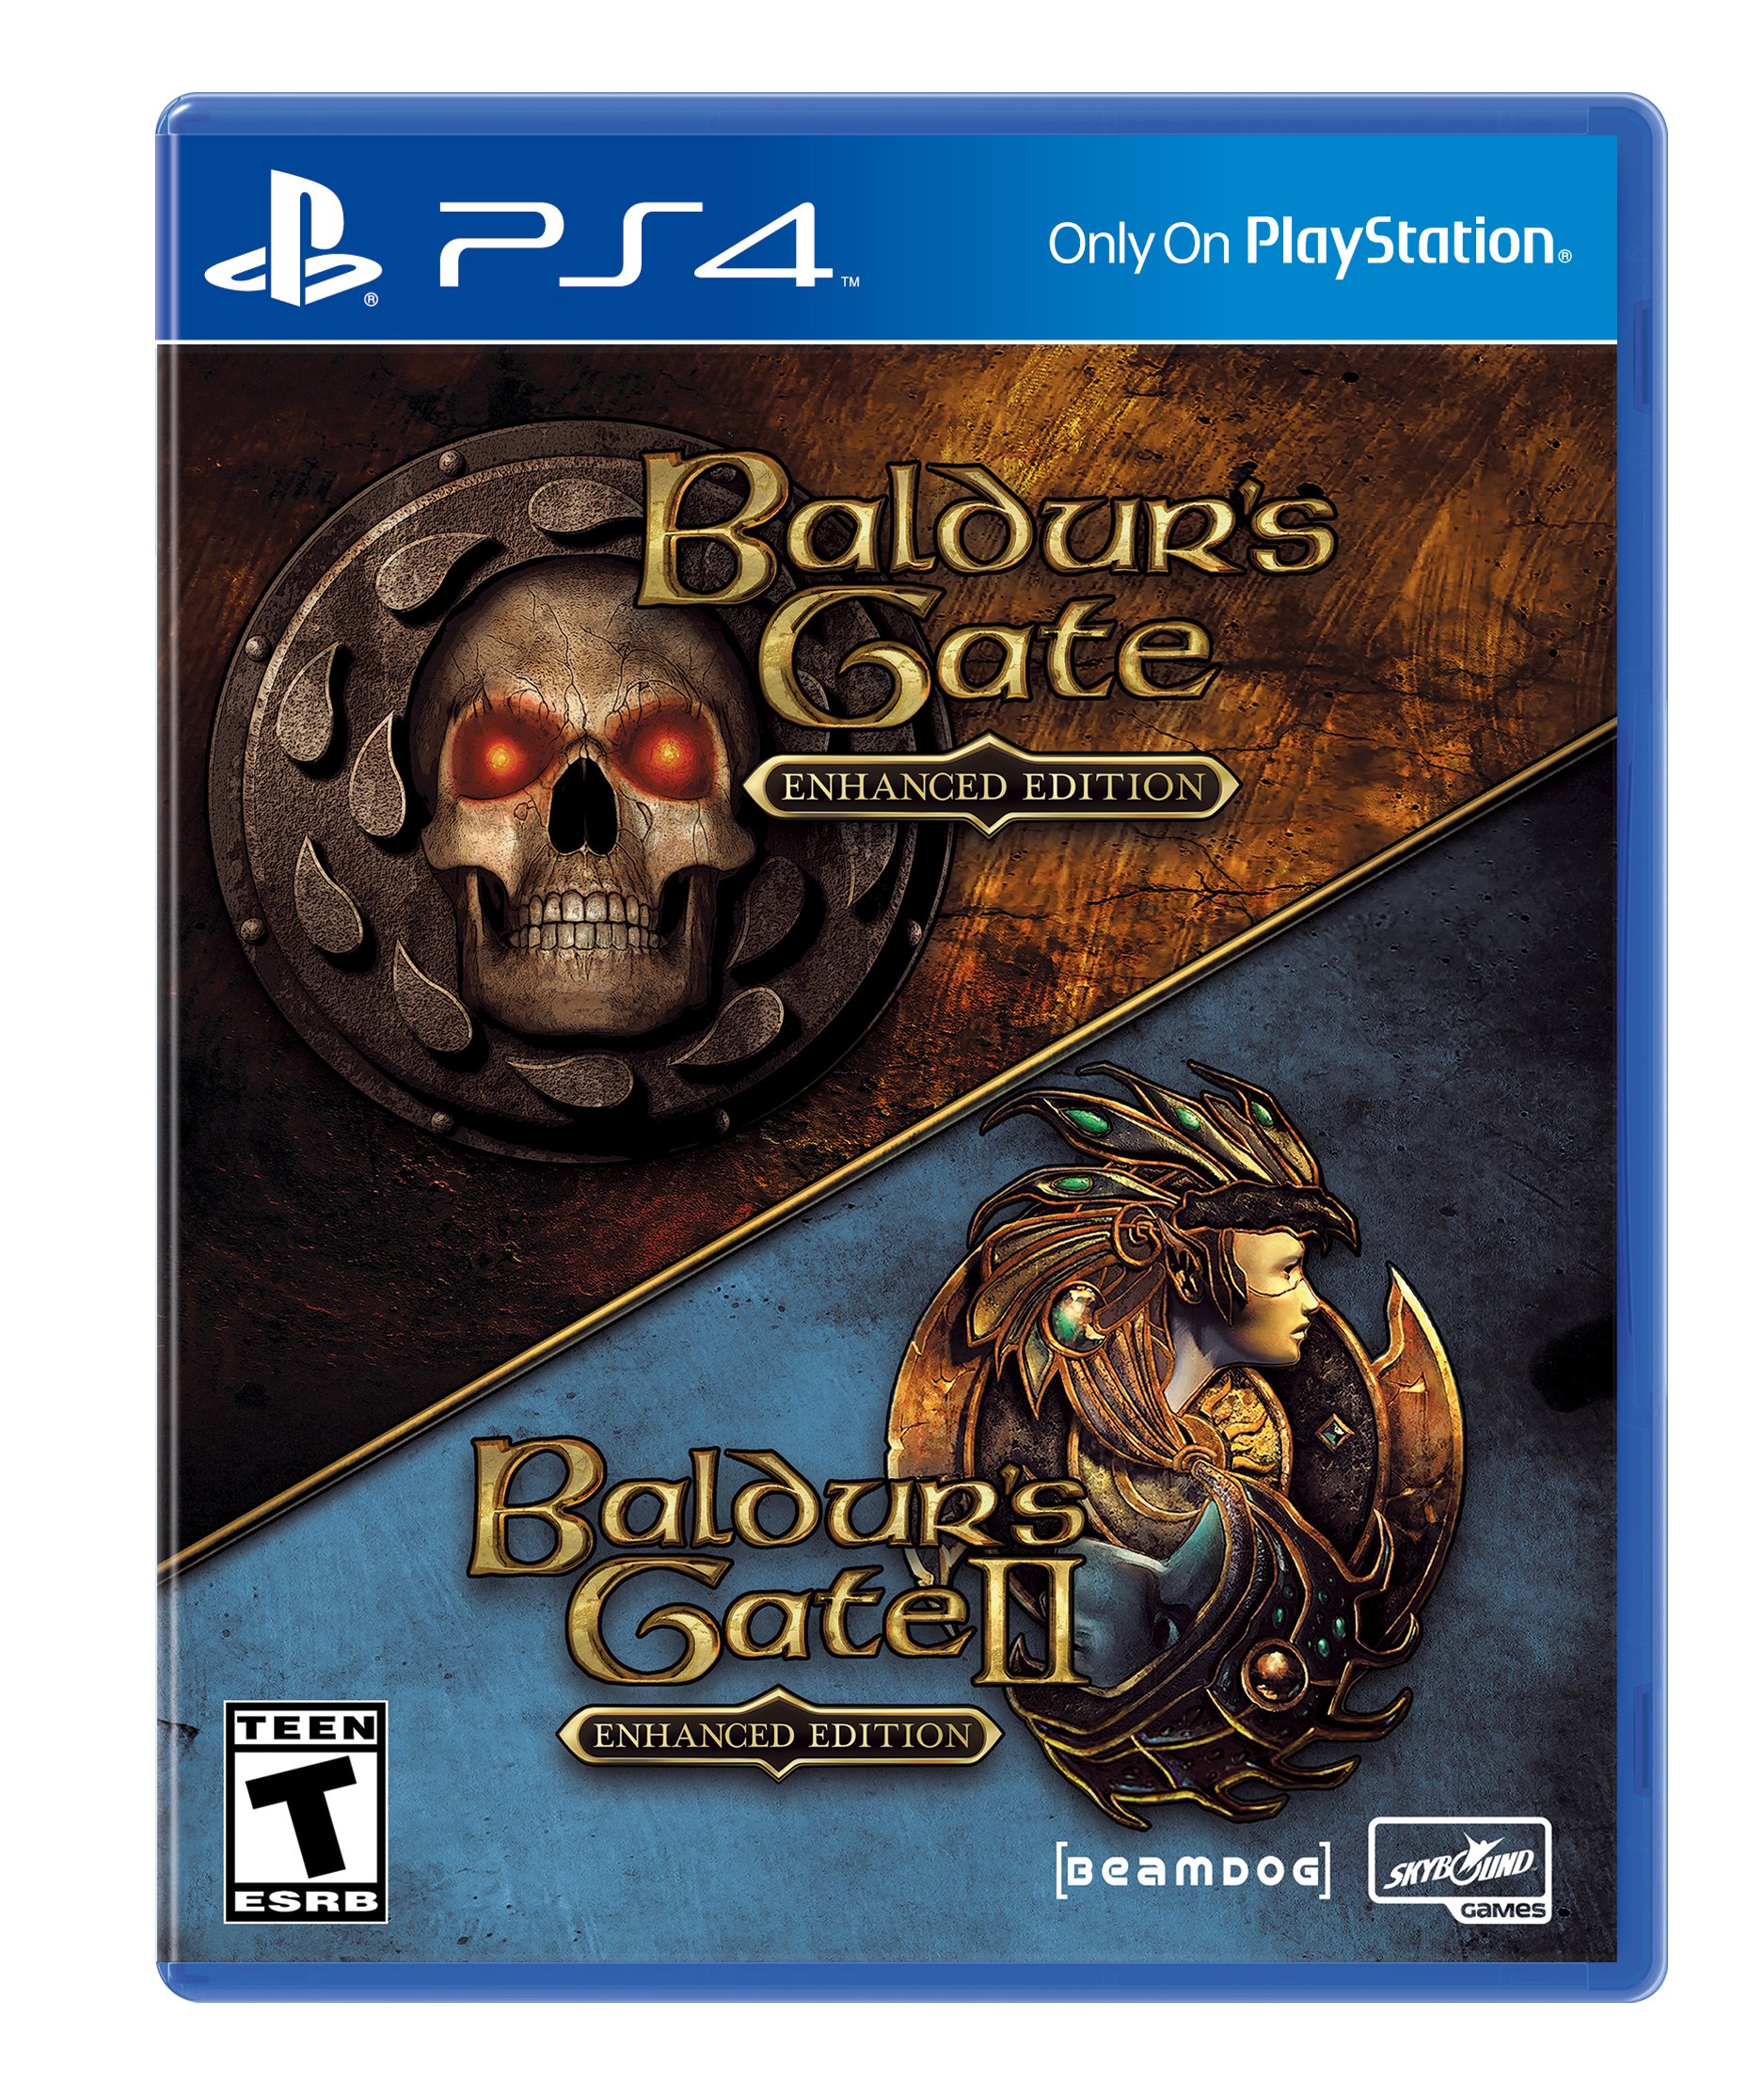 Baldur's Gate 1 2 Enhanced Edition - PlayStation | PlayStation 4 | GameStop